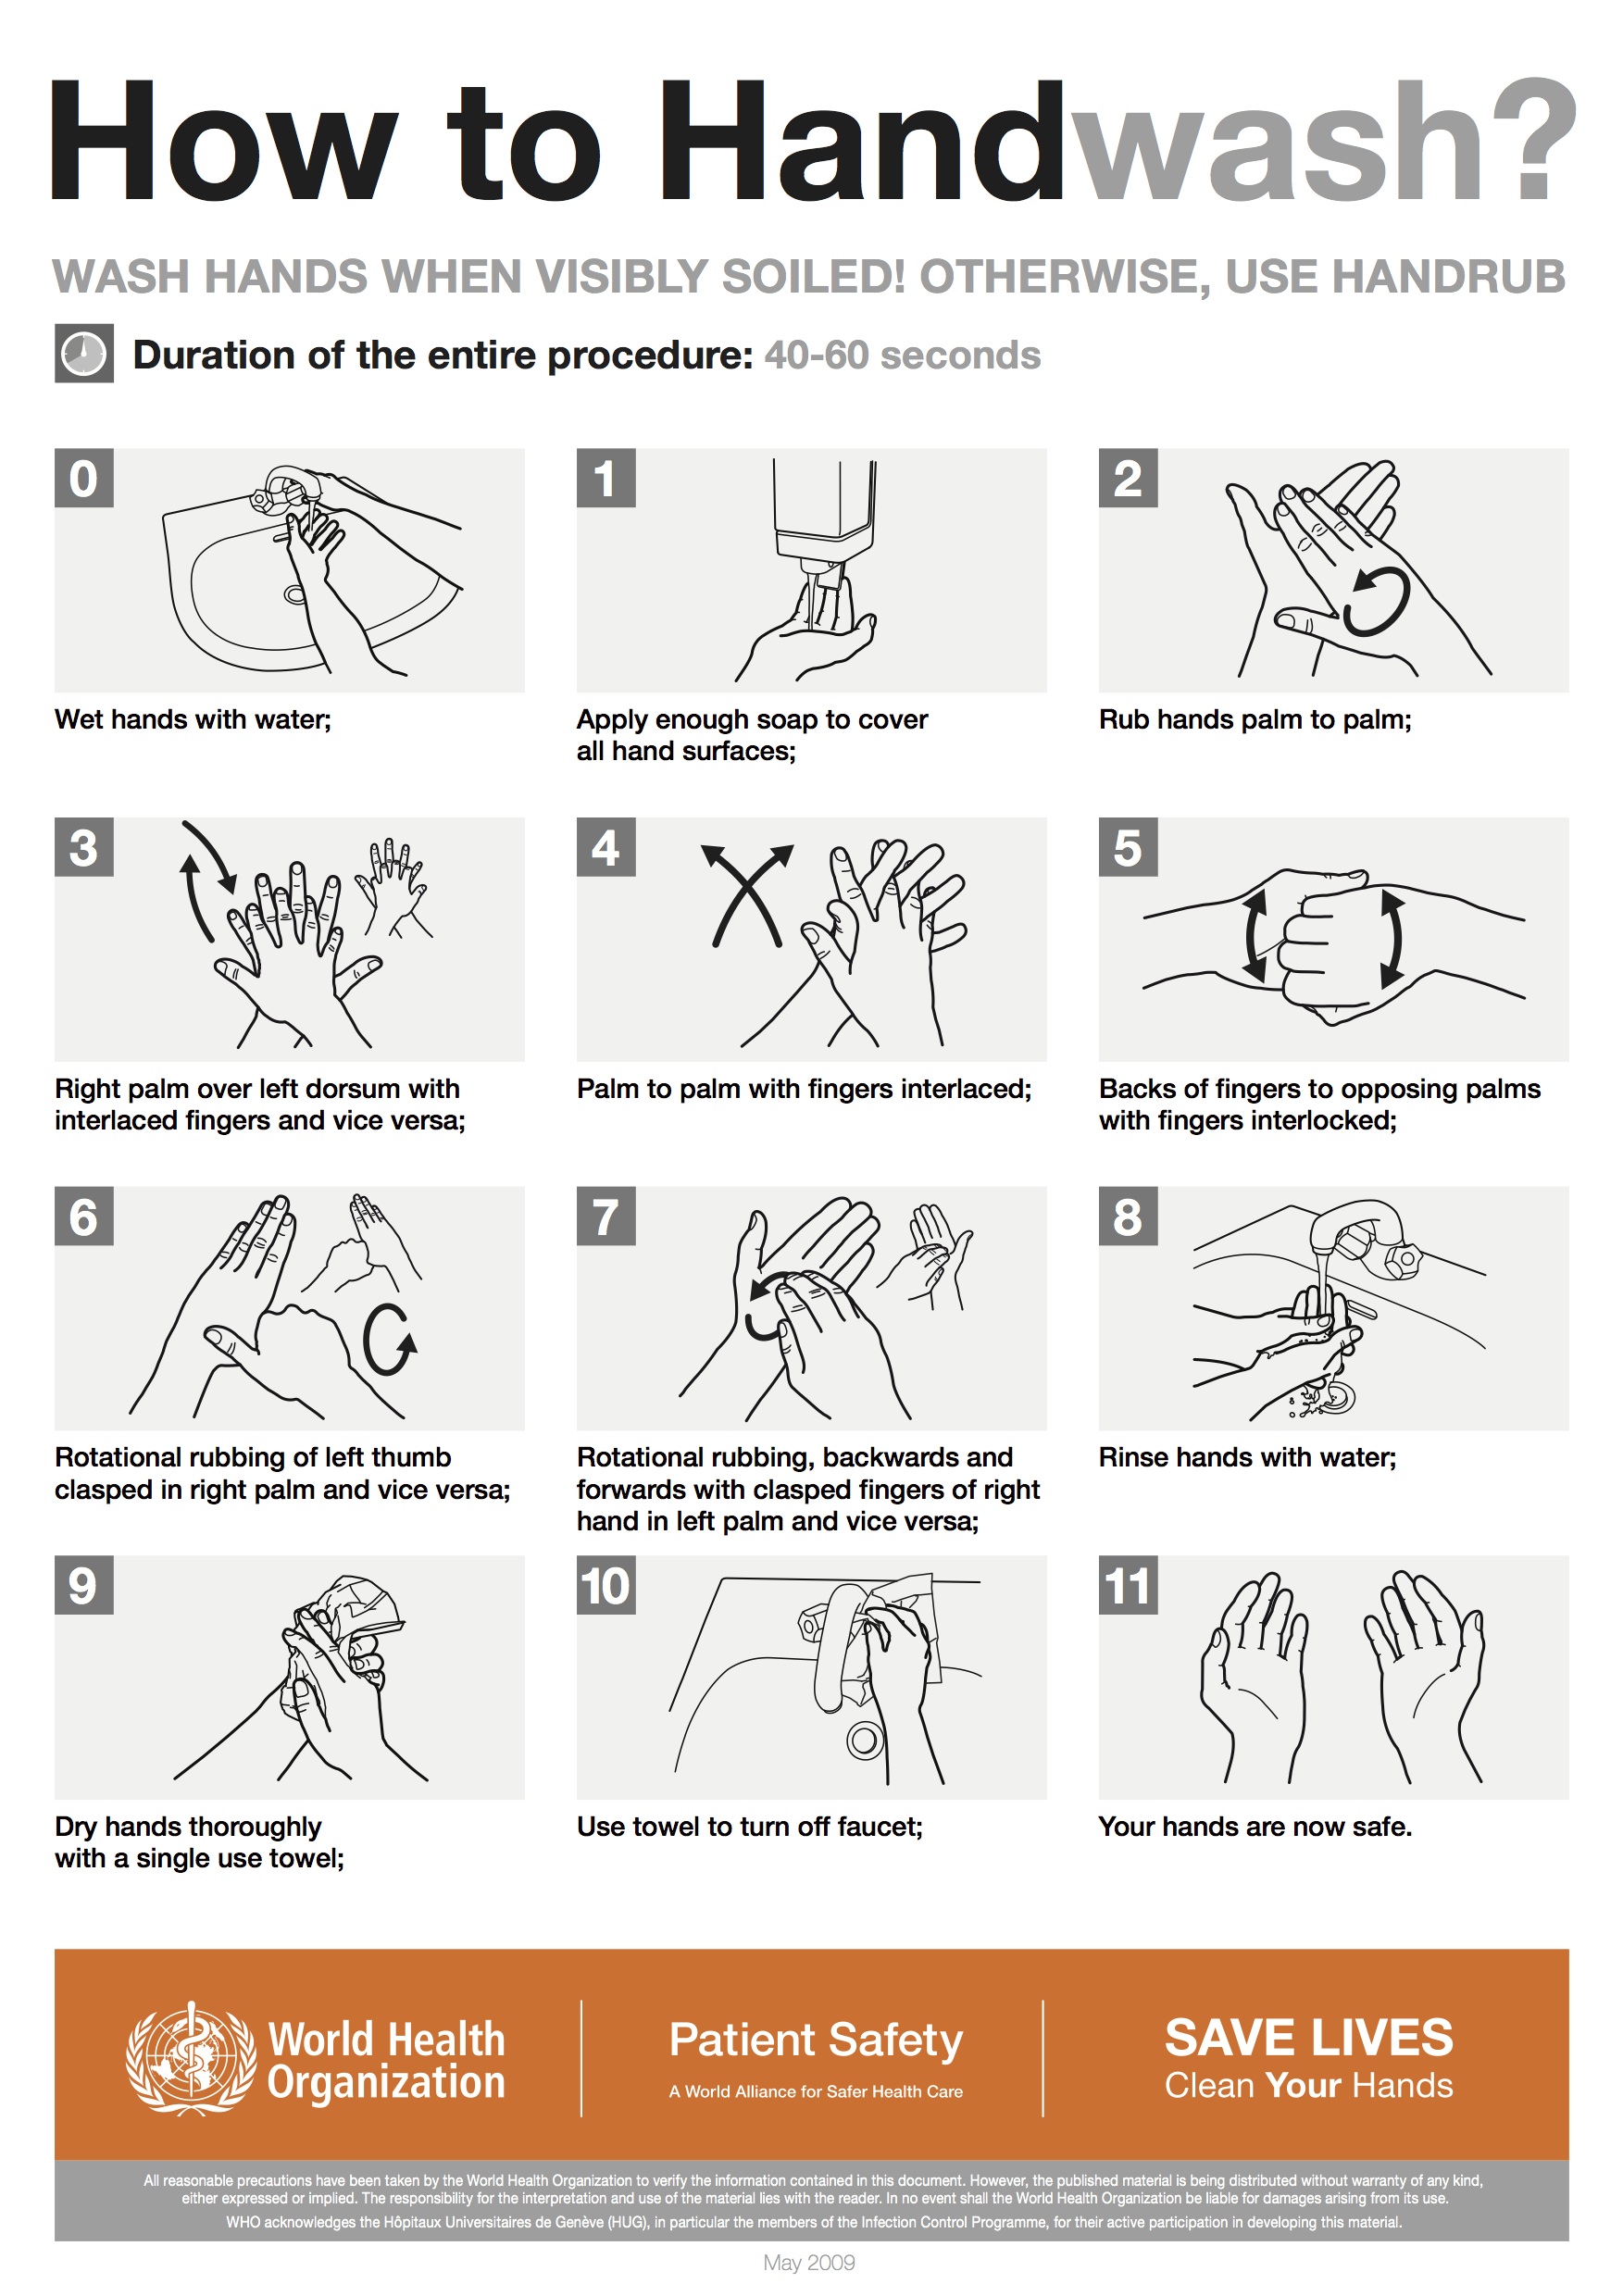 Blog - FLU SEASON AND HAND WASHING Photo 